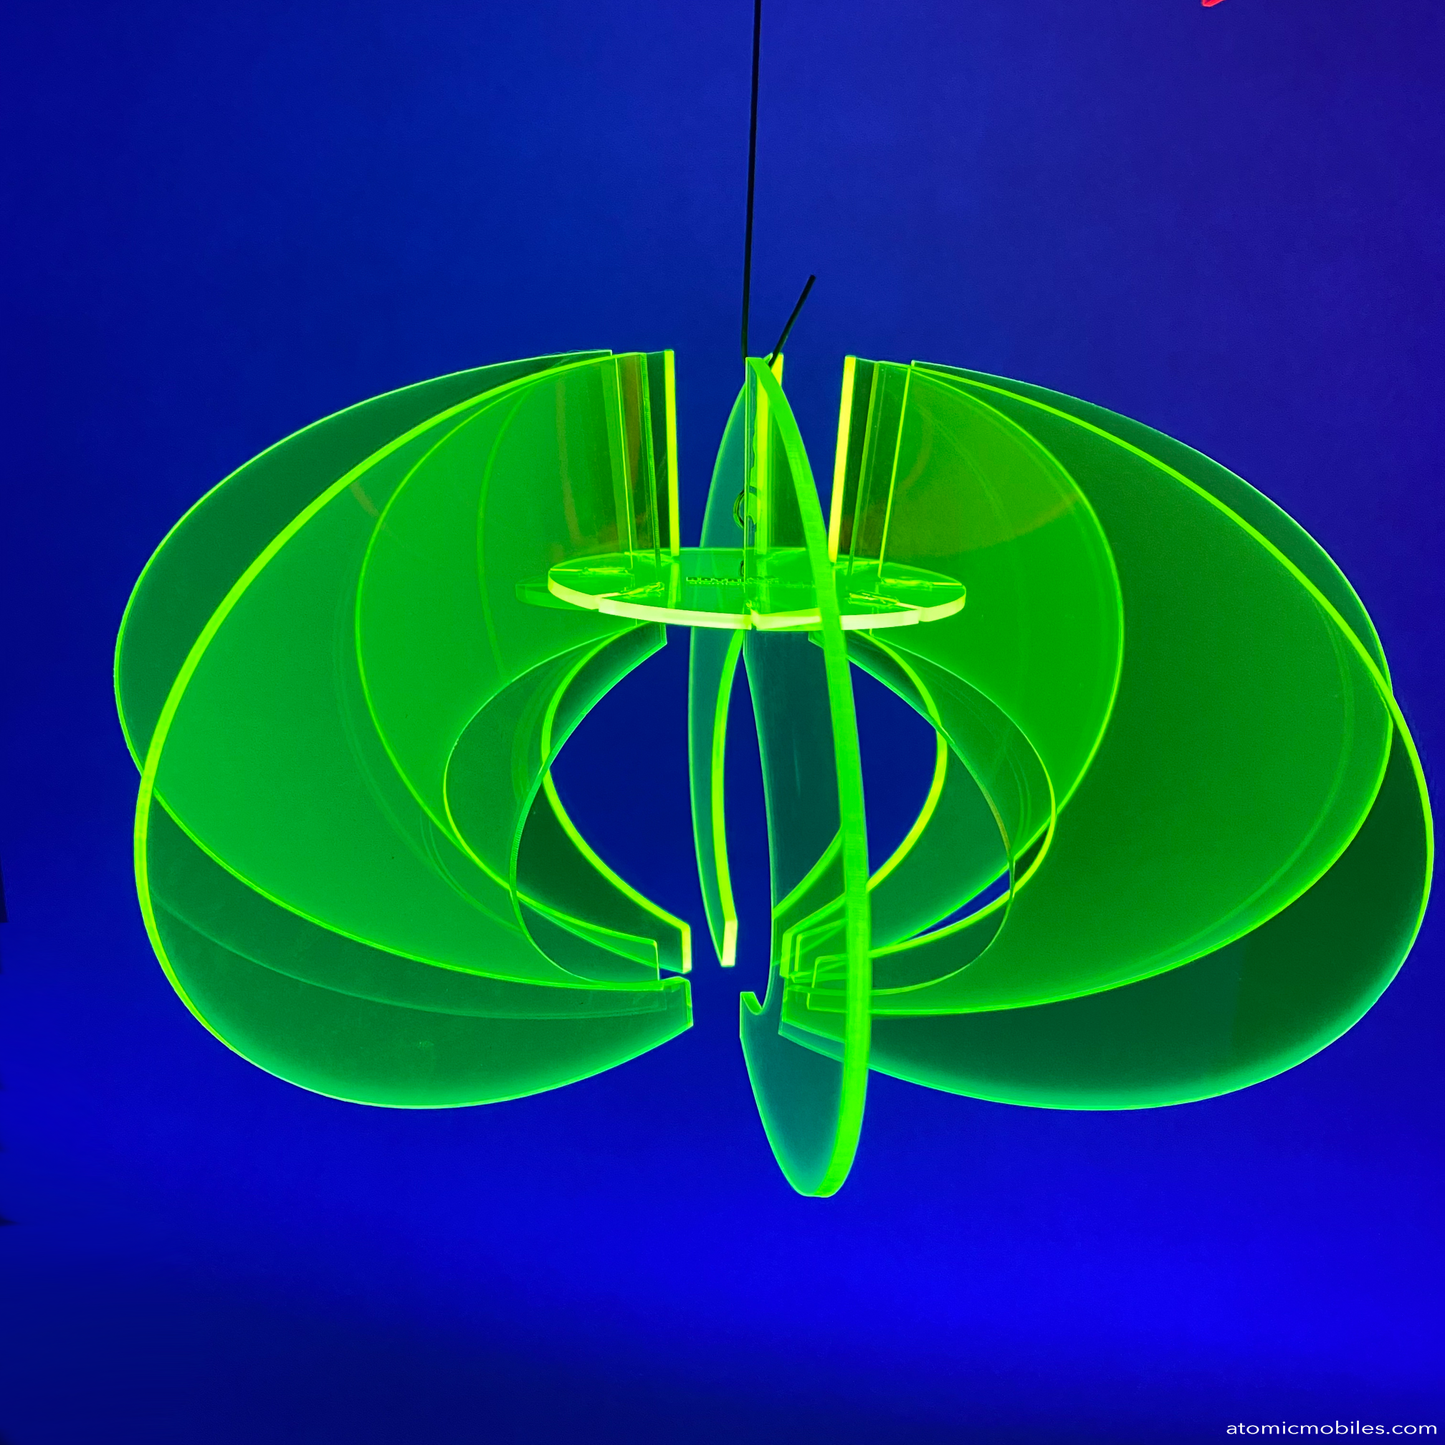 Orbit + Space Age RotaMobiles | Fluorescent Duets